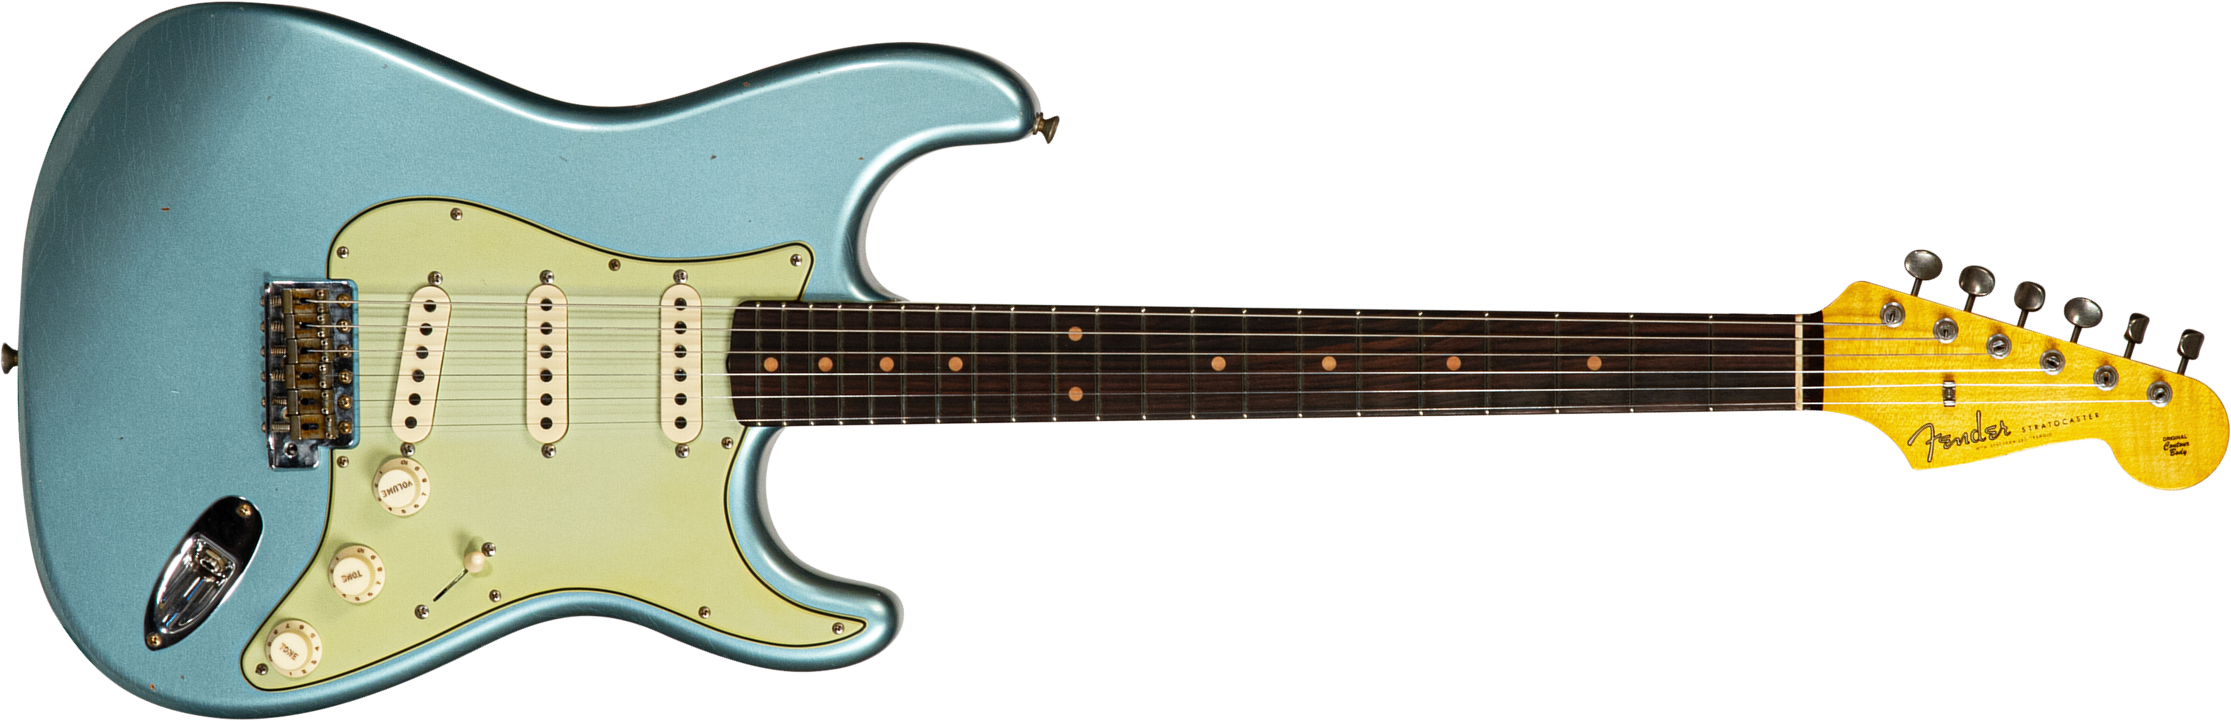 Fender Custom Shop Strat 1959 3s Trem Rw #cz566857 - Journeyman Relic Teal Green Metallic - E-Gitarre in Str-Form - Main picture